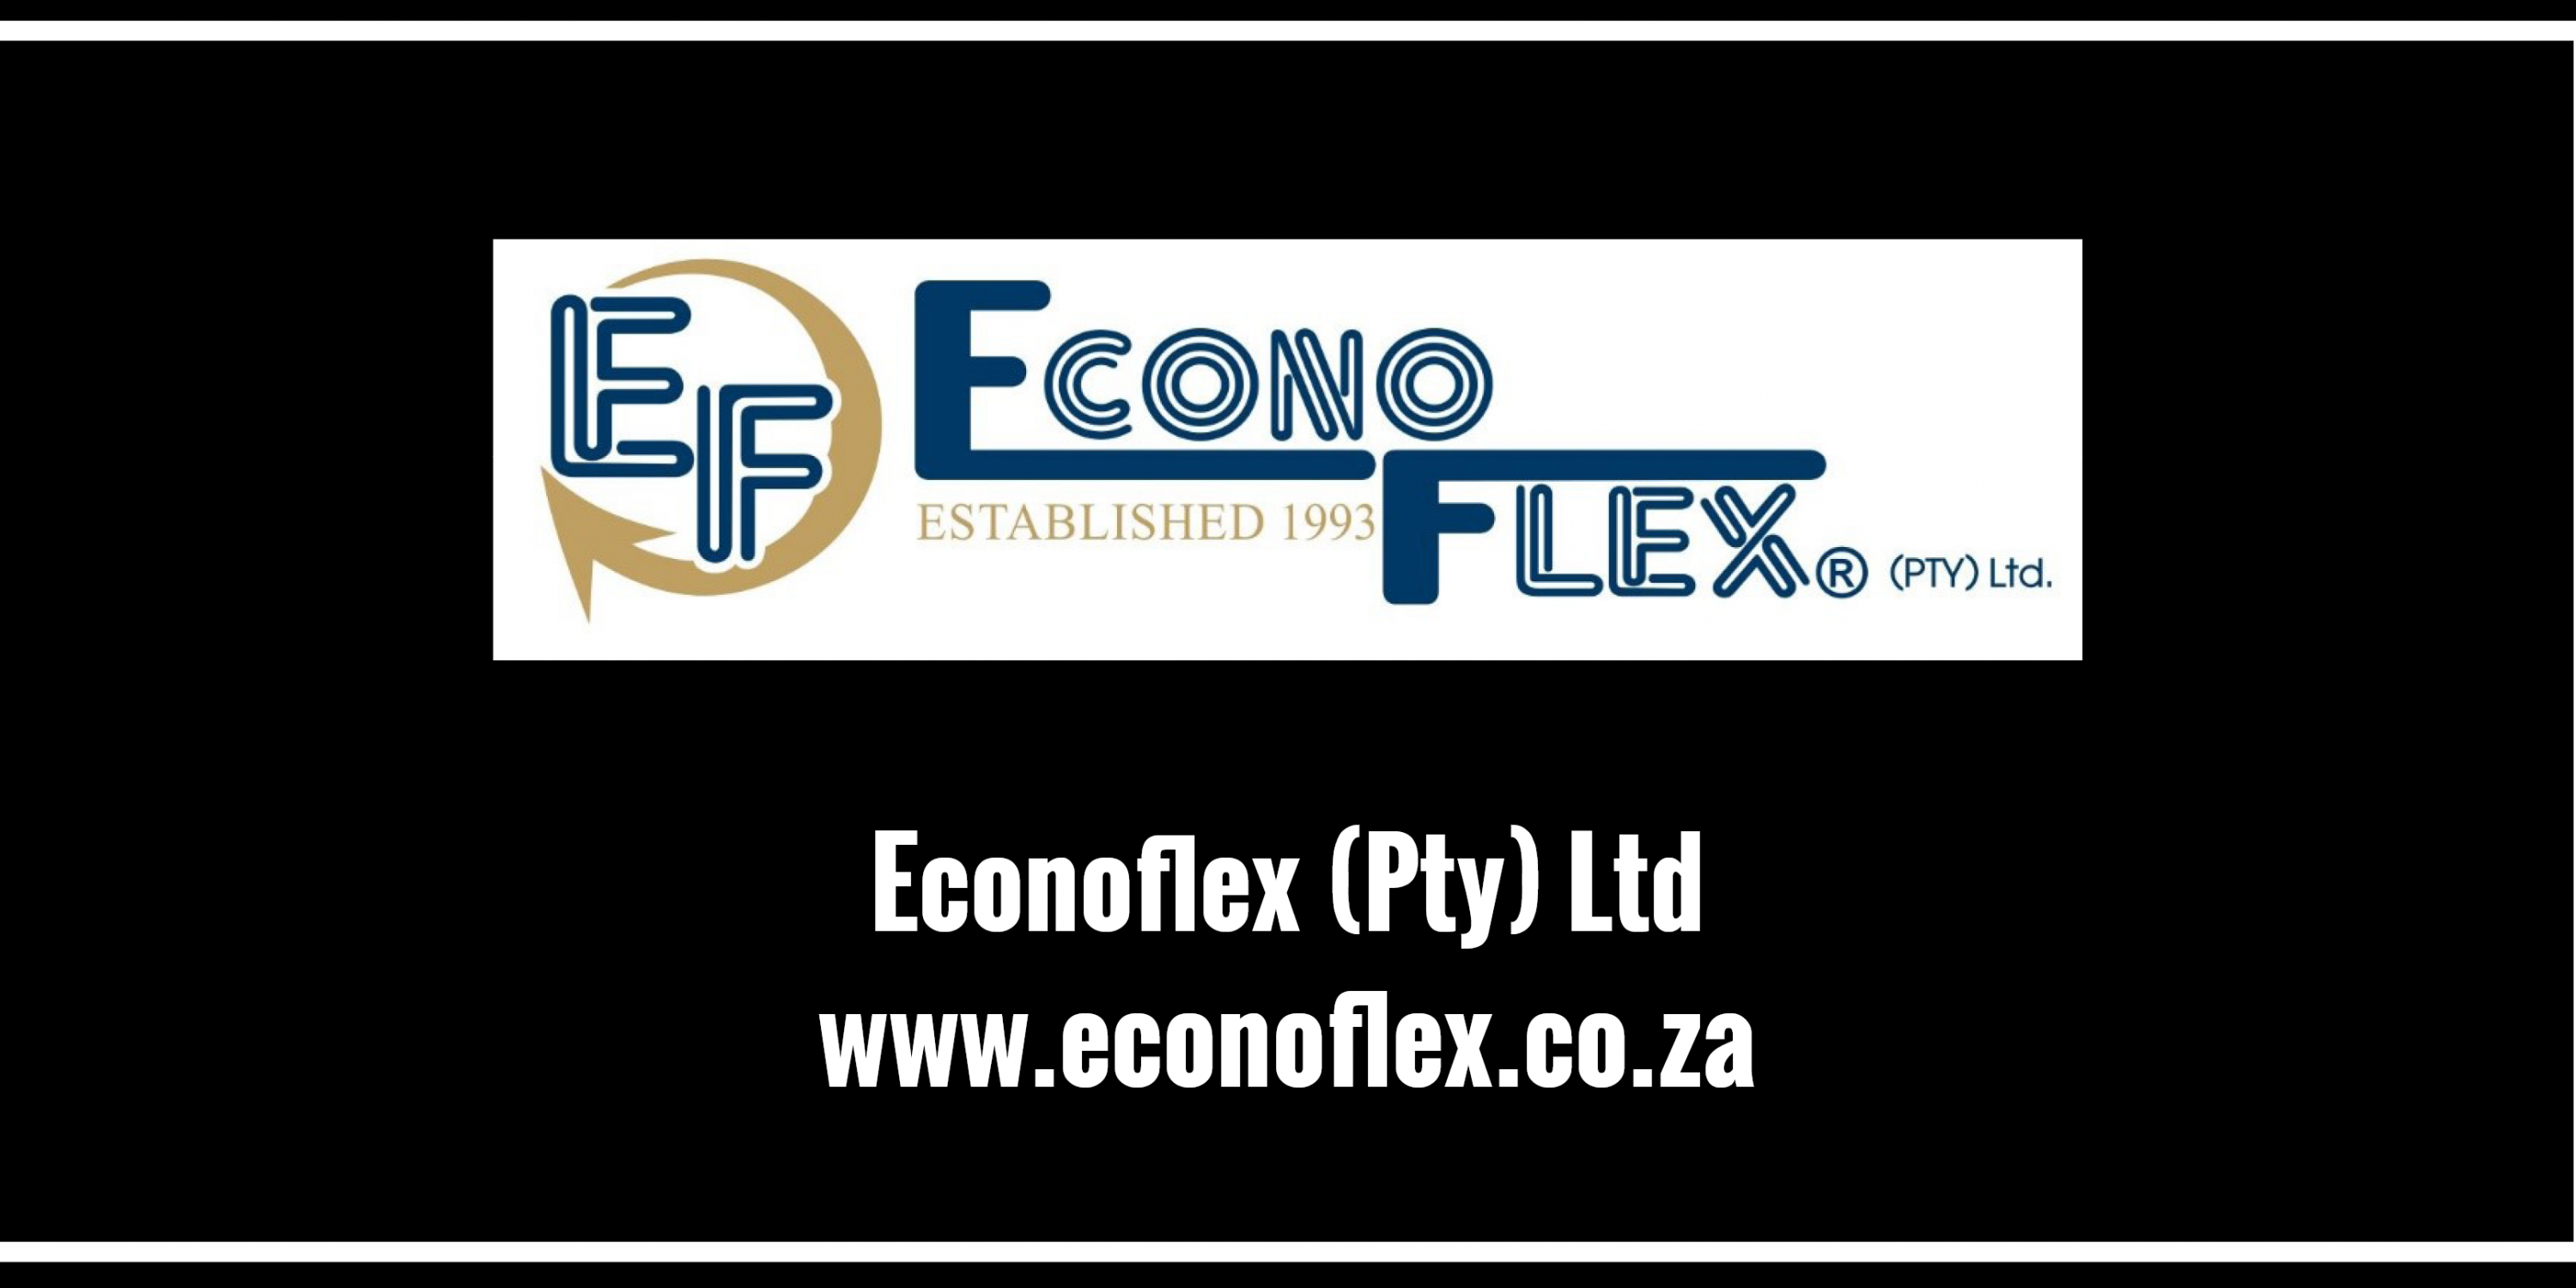 Econoflex (Pty) Ltd